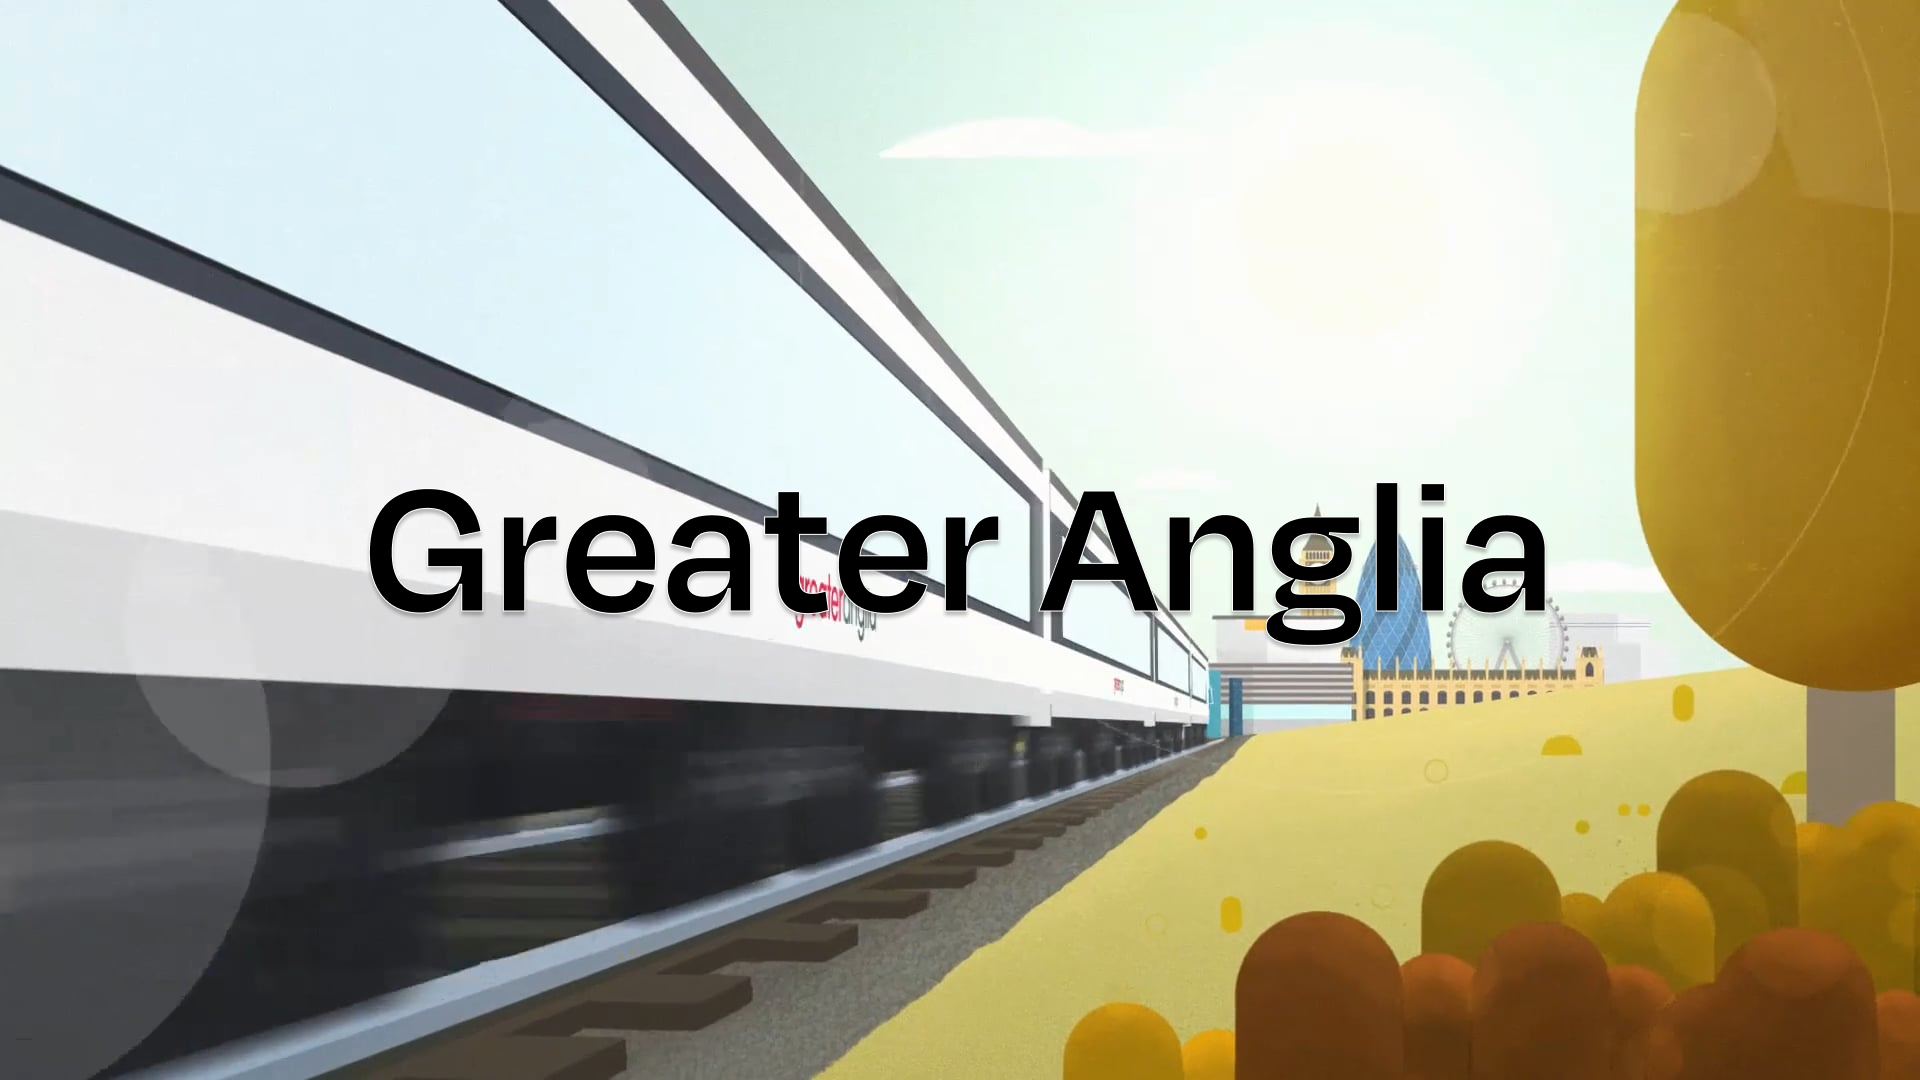 Greater Anglia